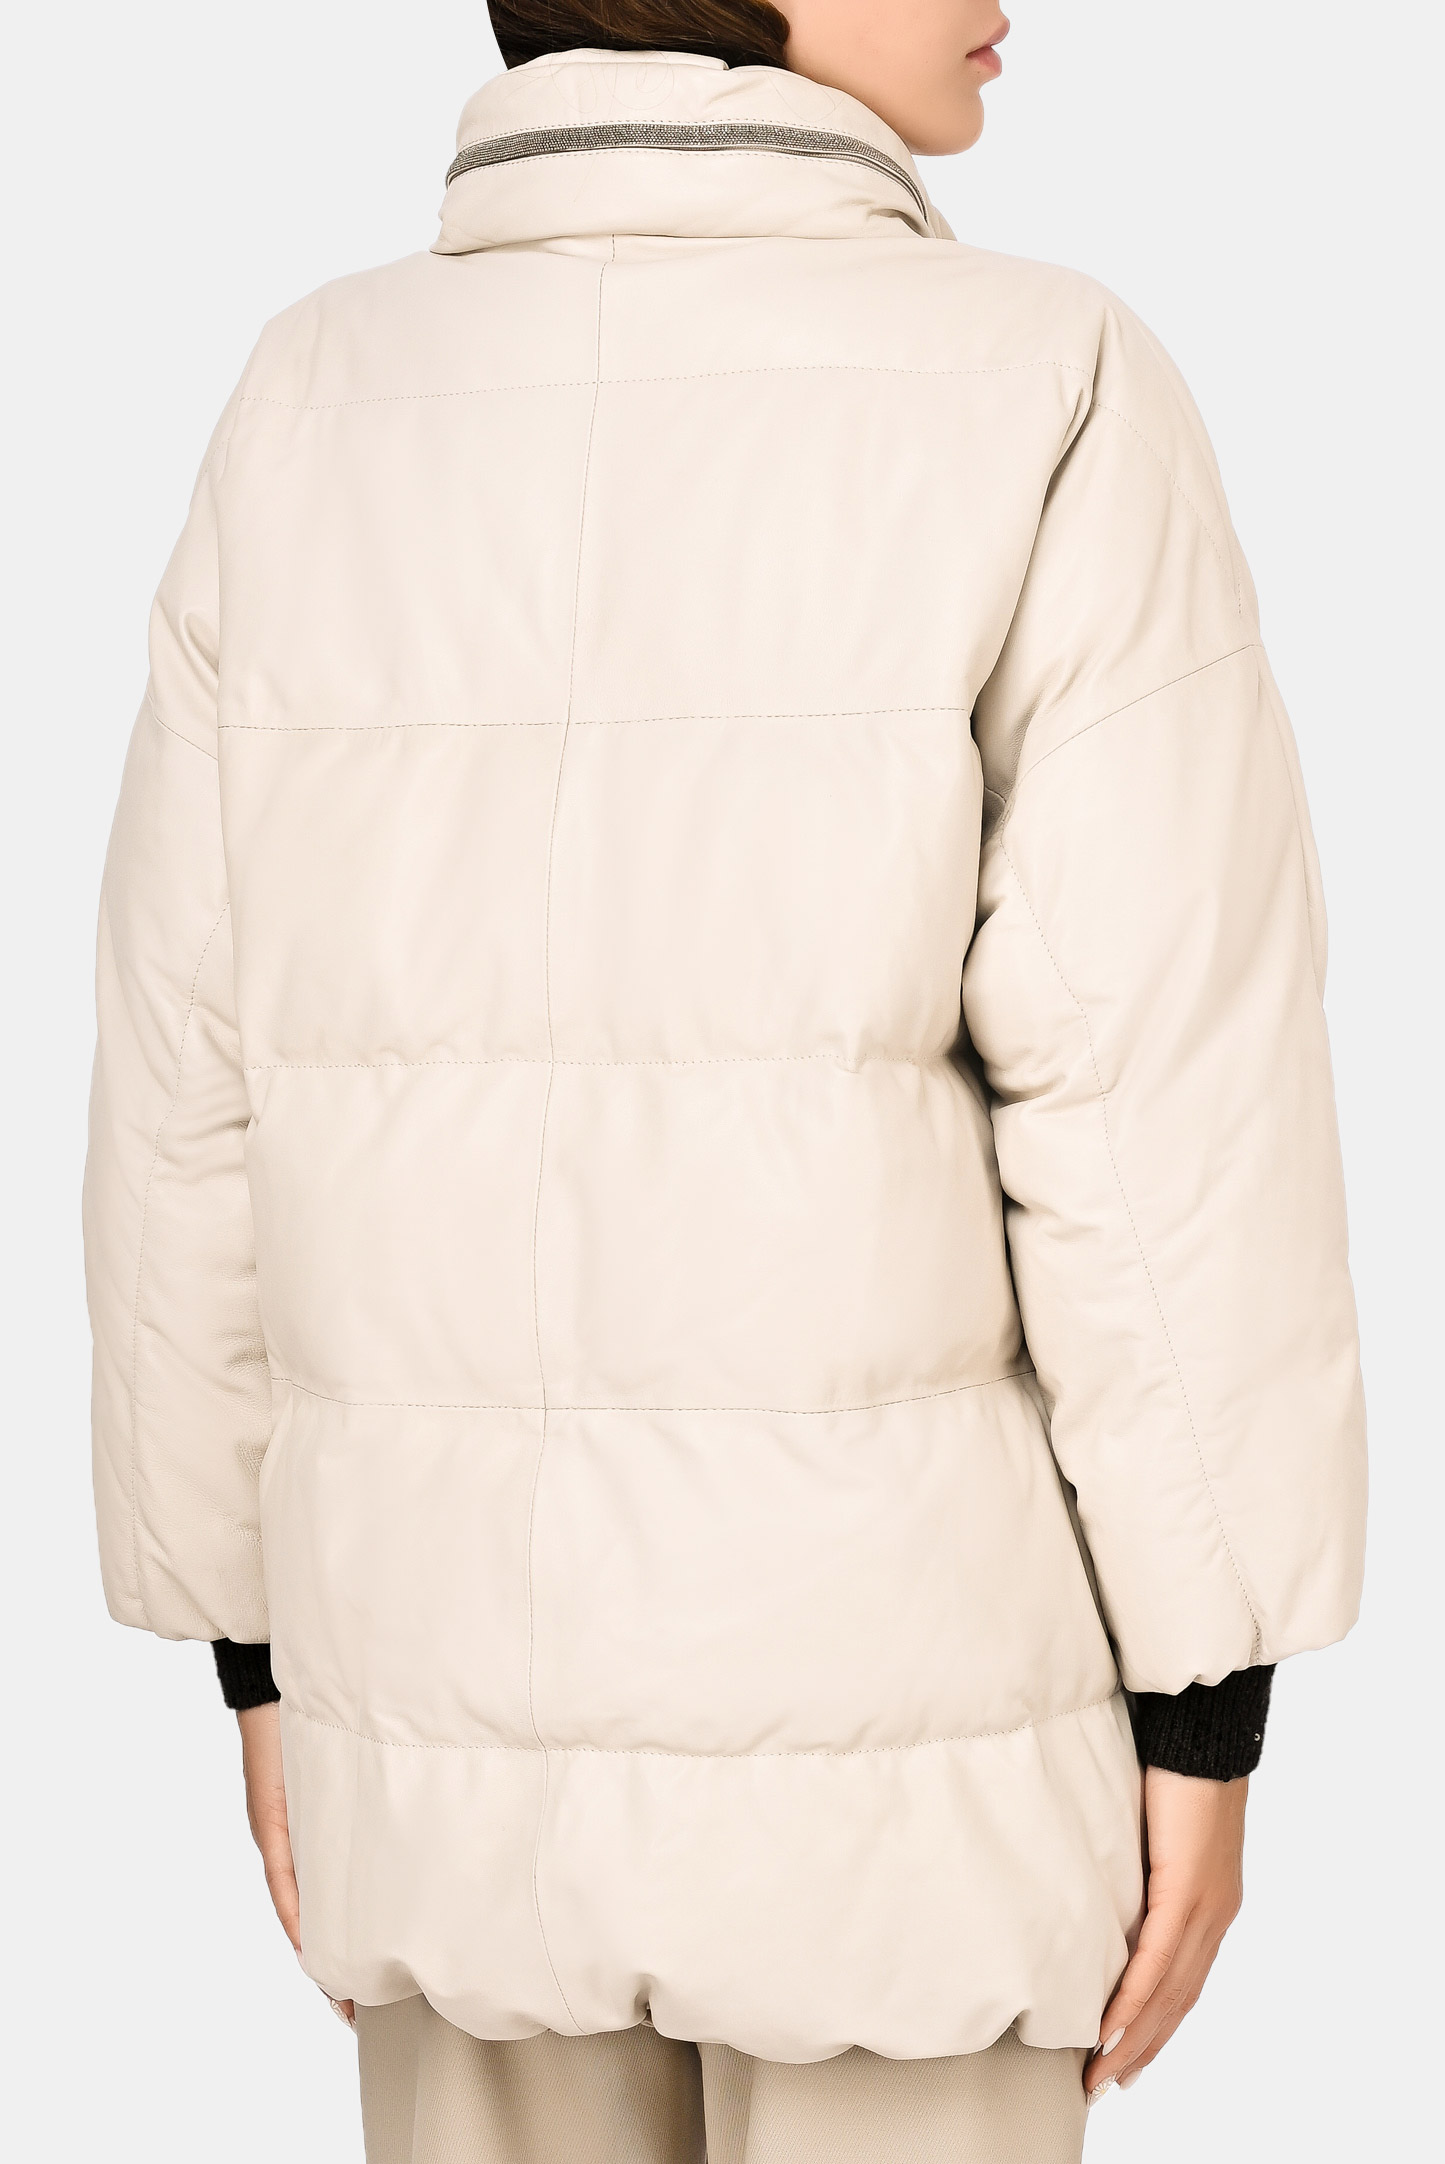 Куртка BRUNELLO  CUCINELLI MPTAN2781, цвет: Молочный, Женский